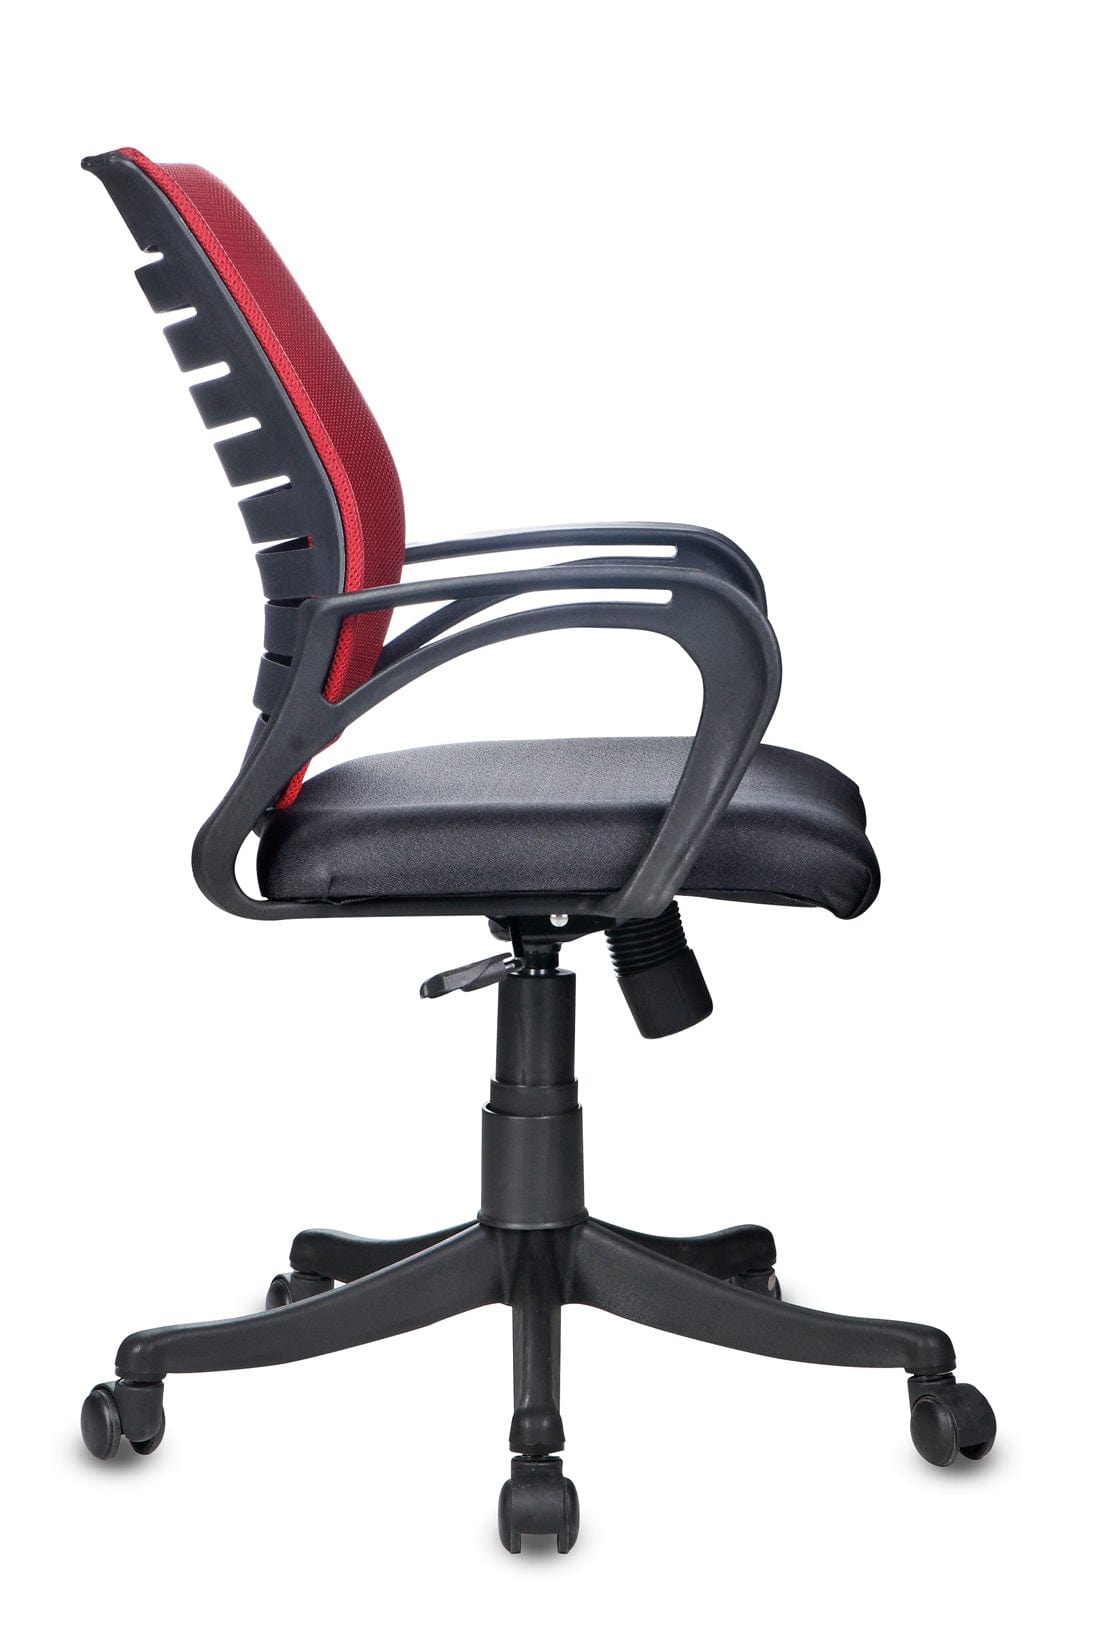 Adiko Superb Mesh chair in Red